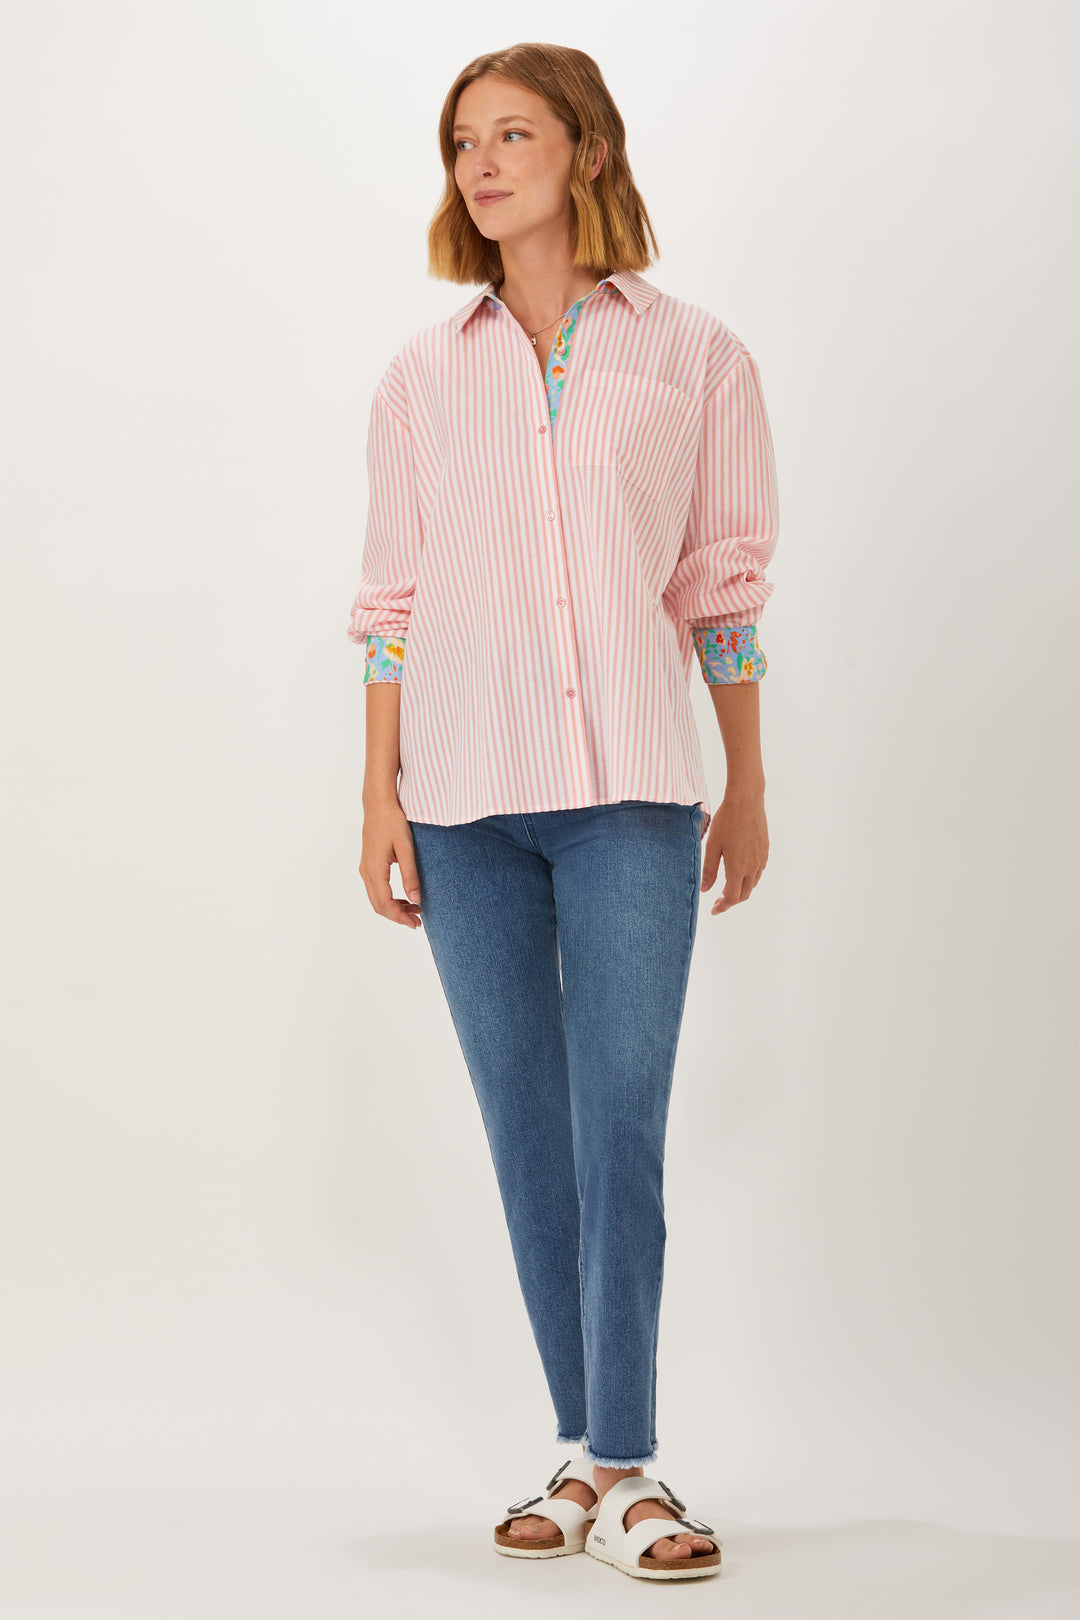 Lawrence Oversize Shirt - Soft Coral Stripe